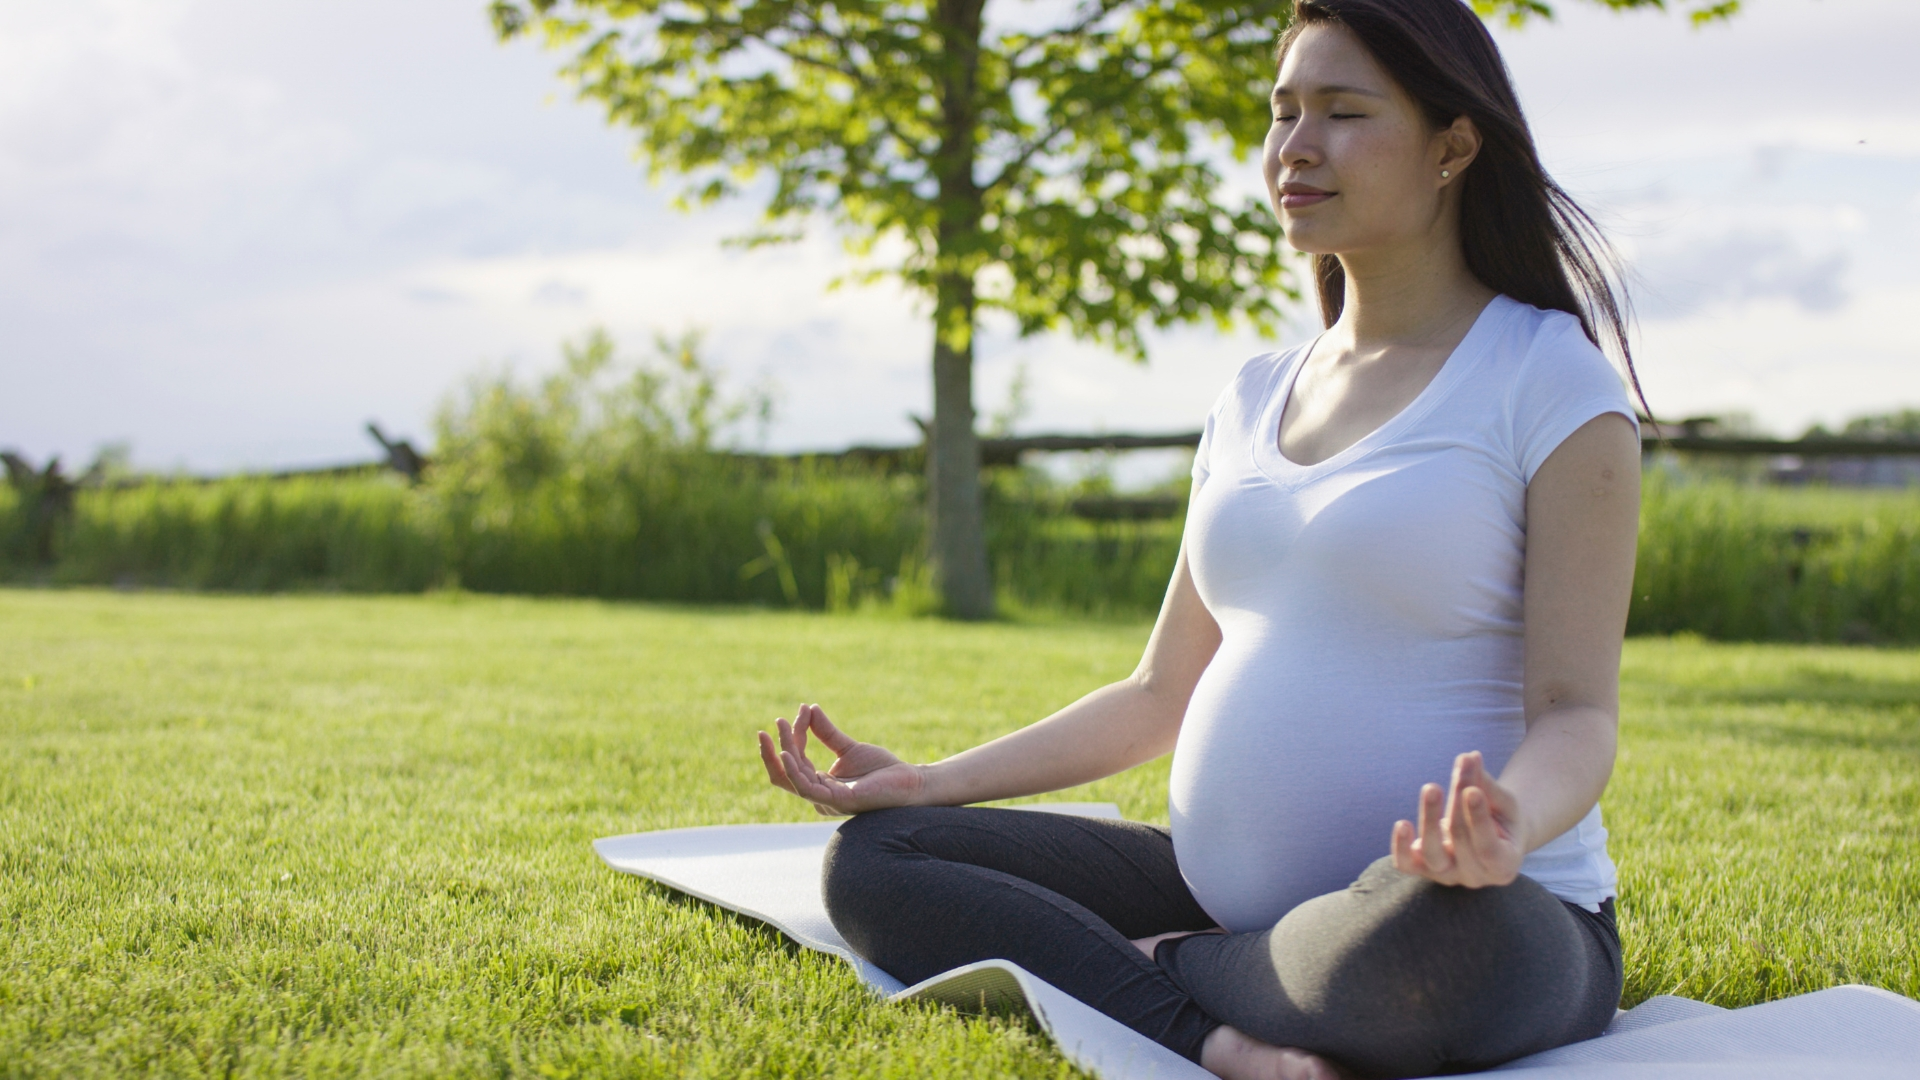 Does Yoga Reduce Pregnancy Stress?